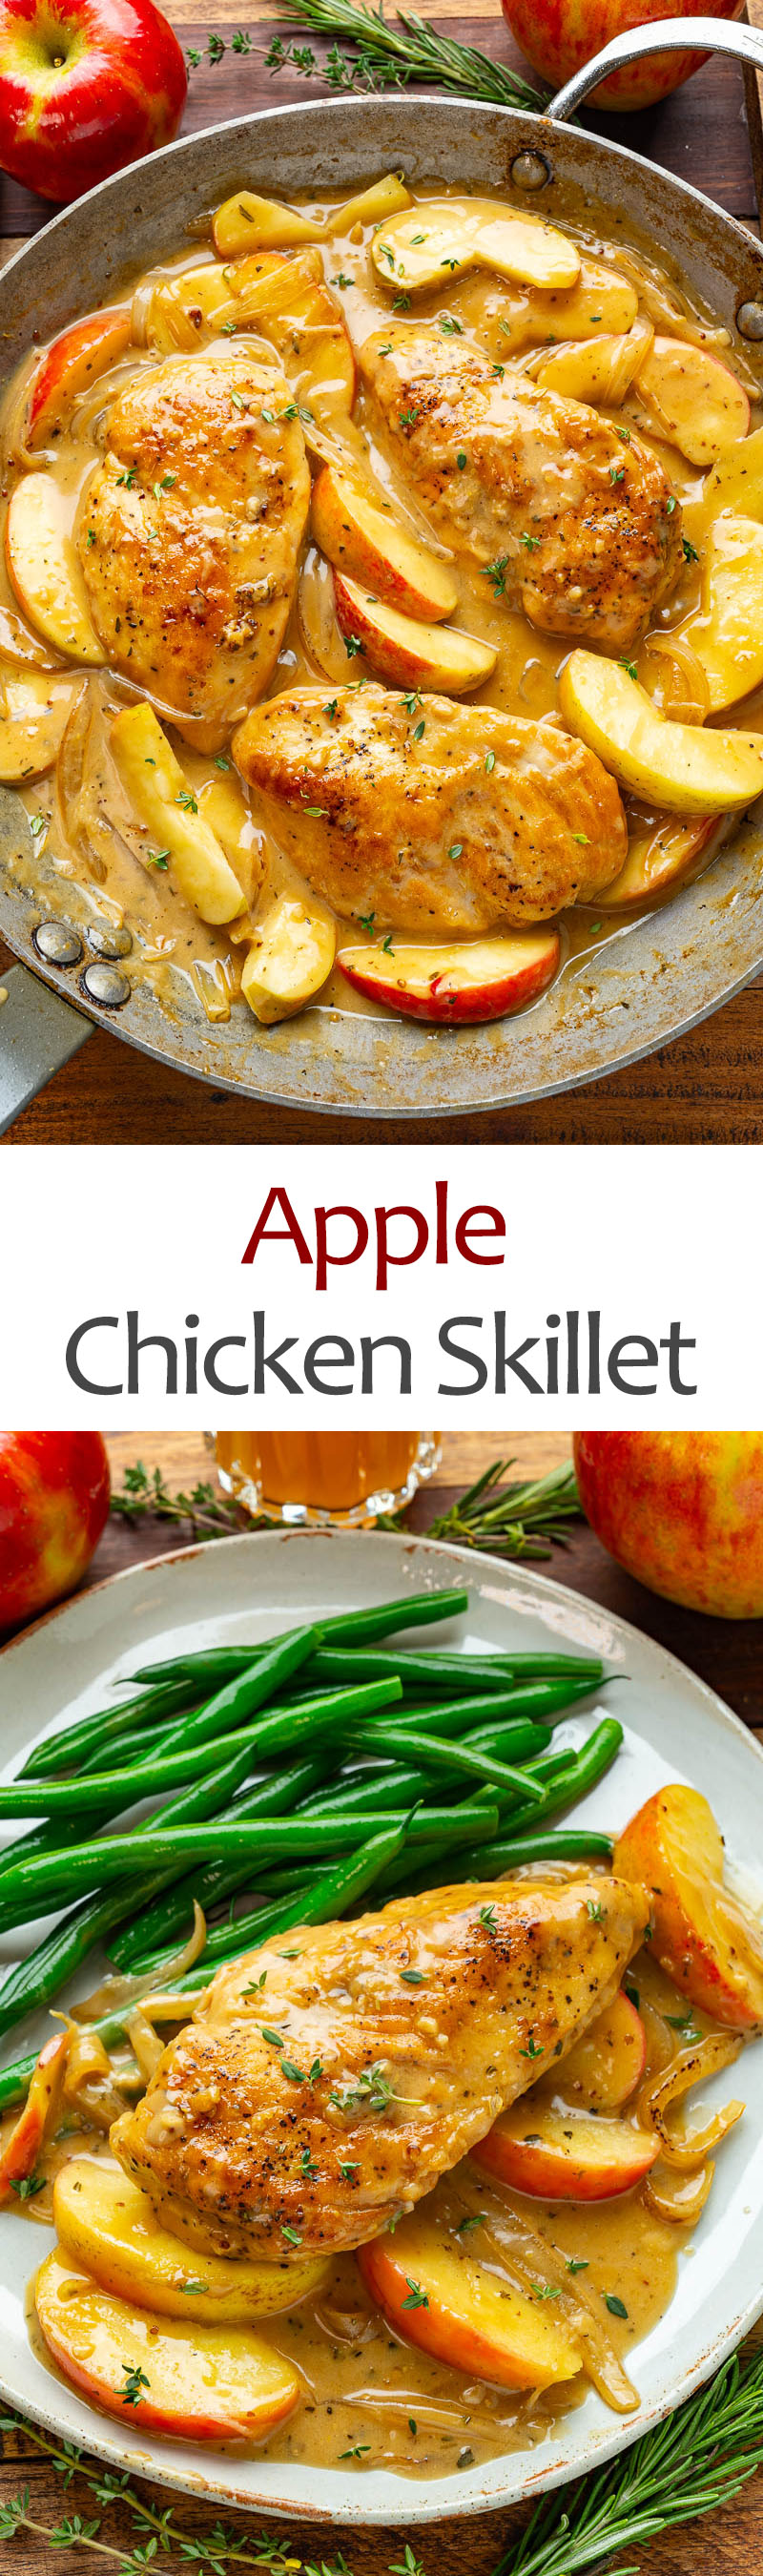 Apple Chicken Skillet